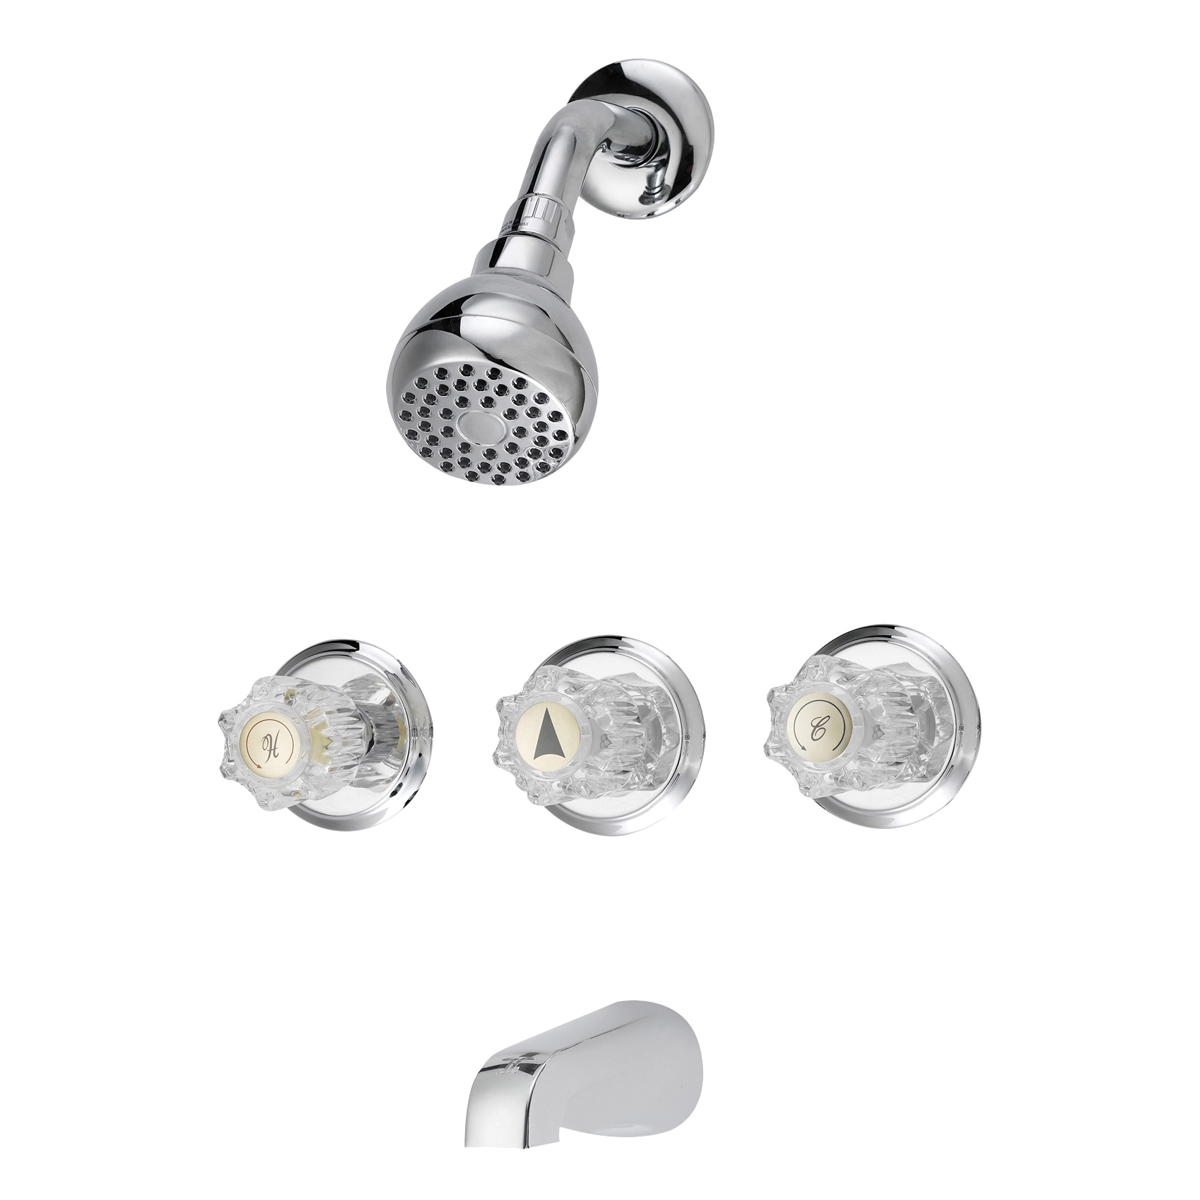 GU-F3010506CP Tub/Shower, Fixed Mount Showerhead, 1.75 gpm Showerhead, 1 Spray Settings, 3-Handle